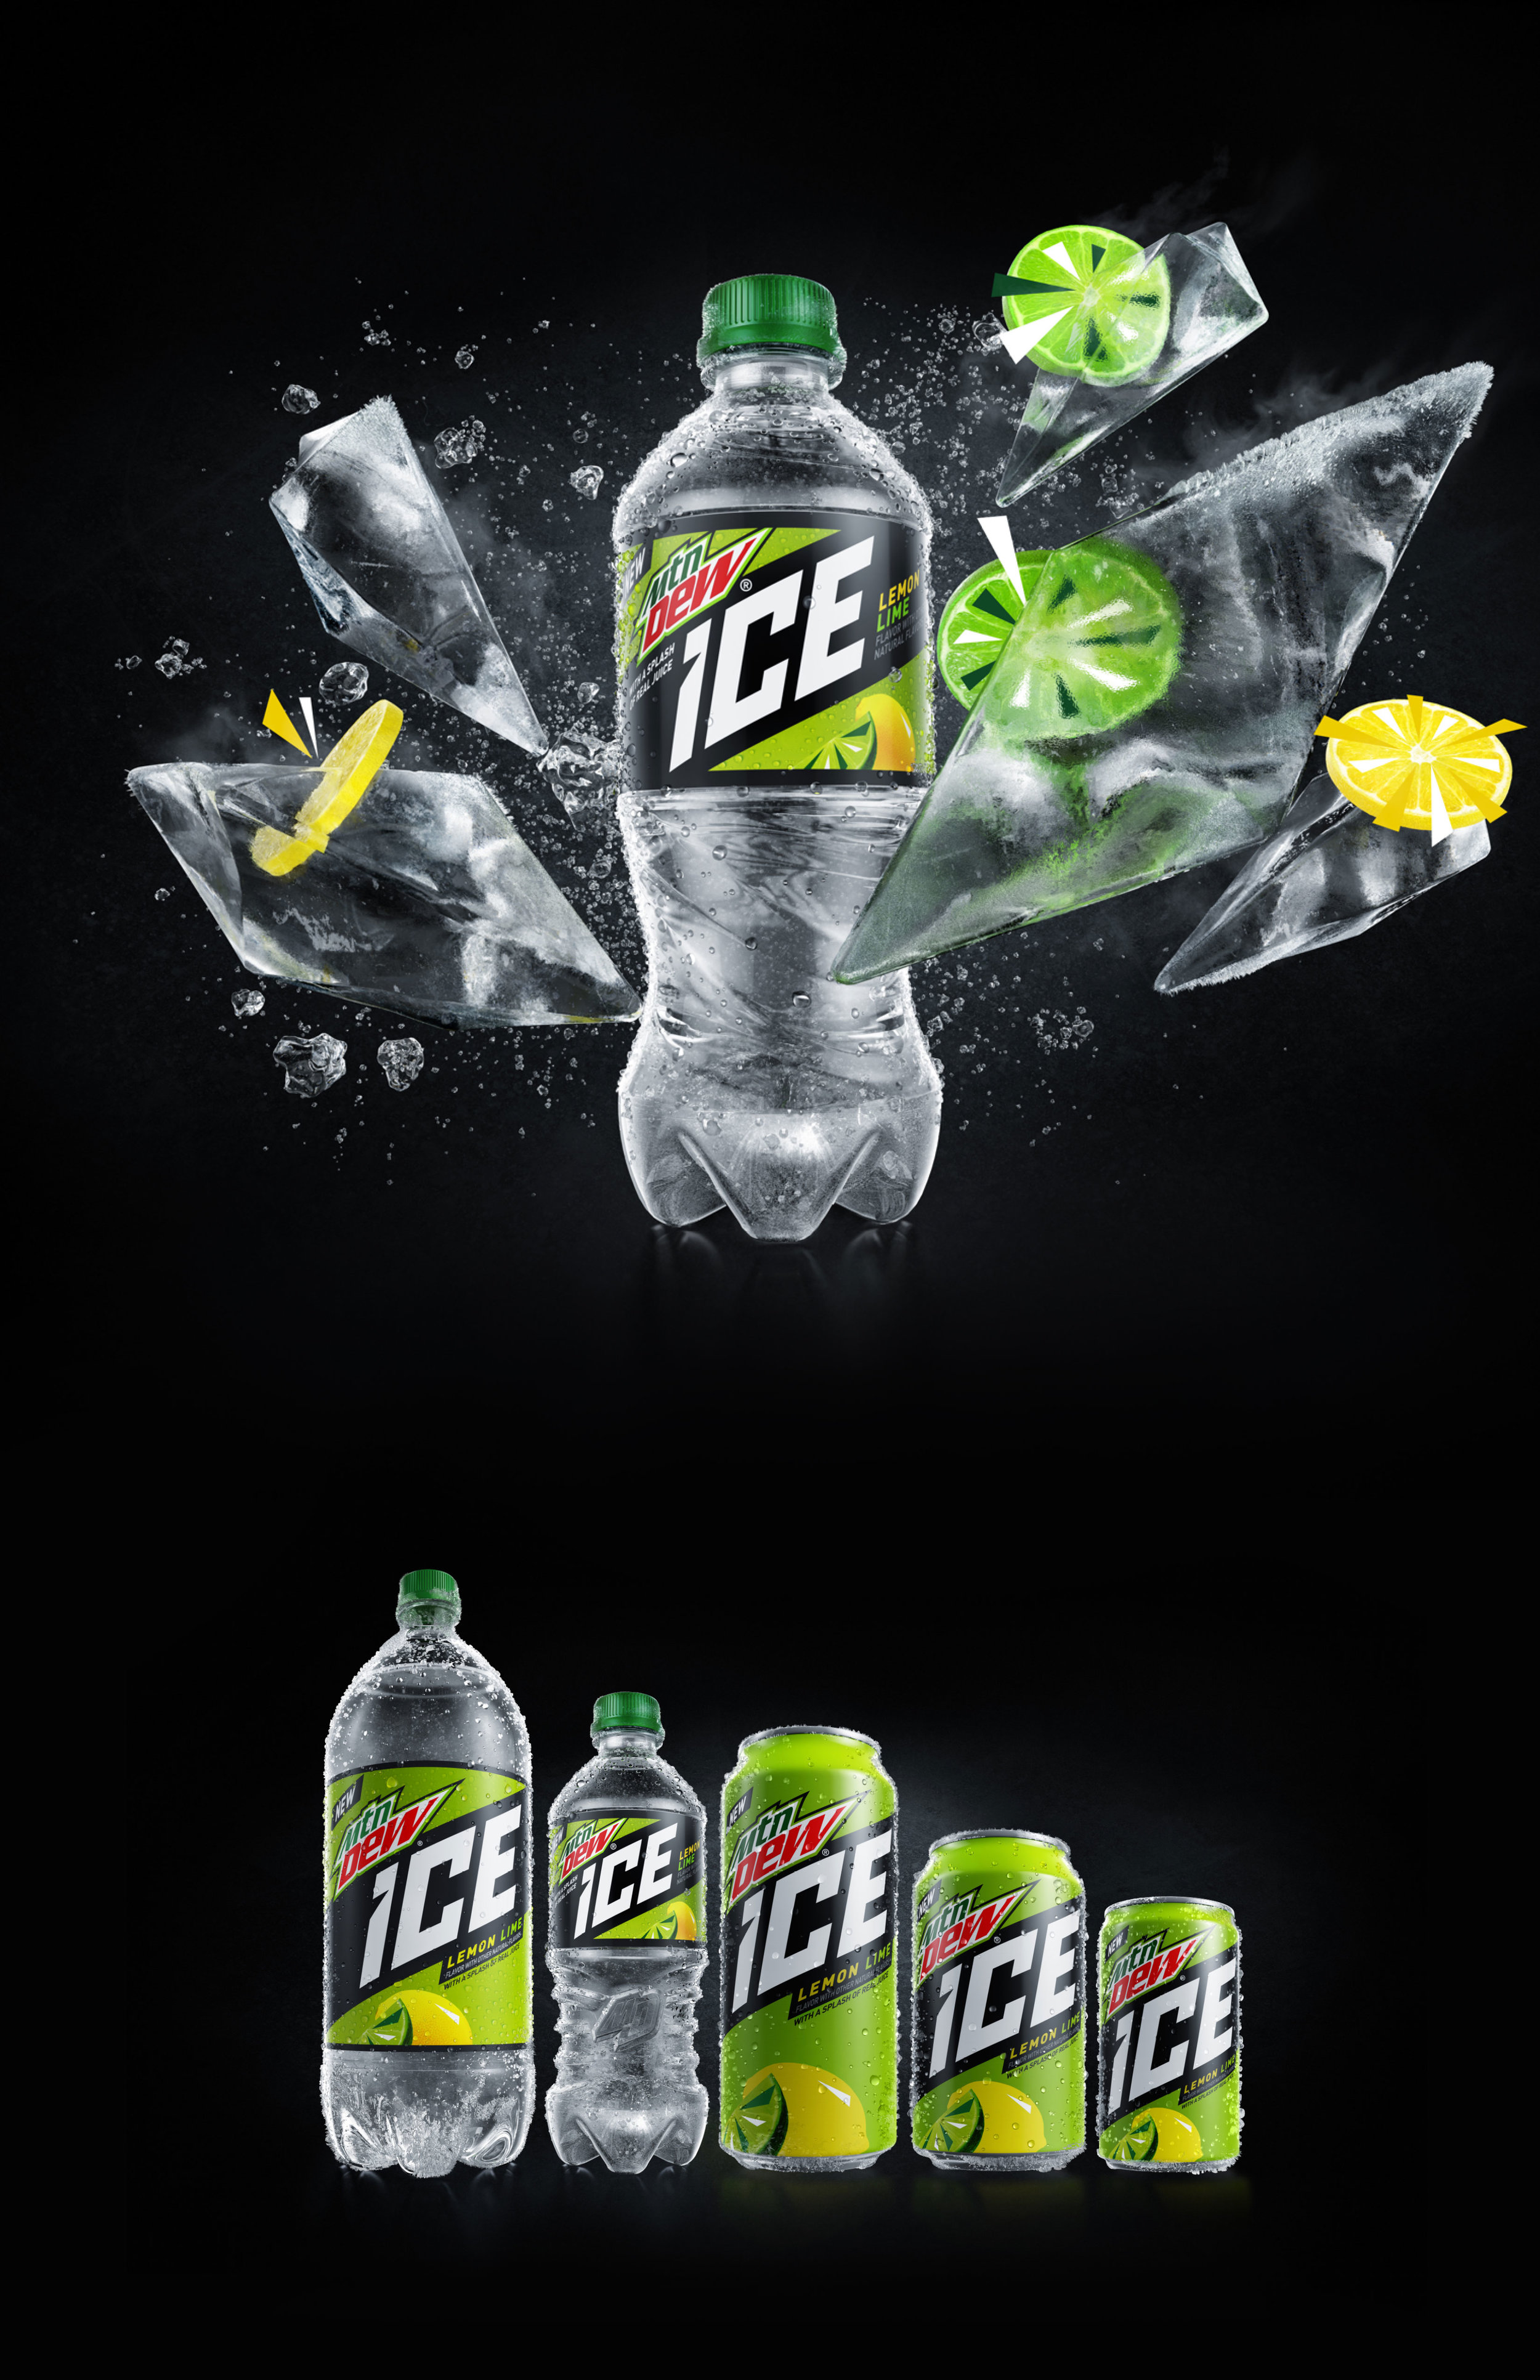 Mountain-dew-Ice-brand-overview.jpg